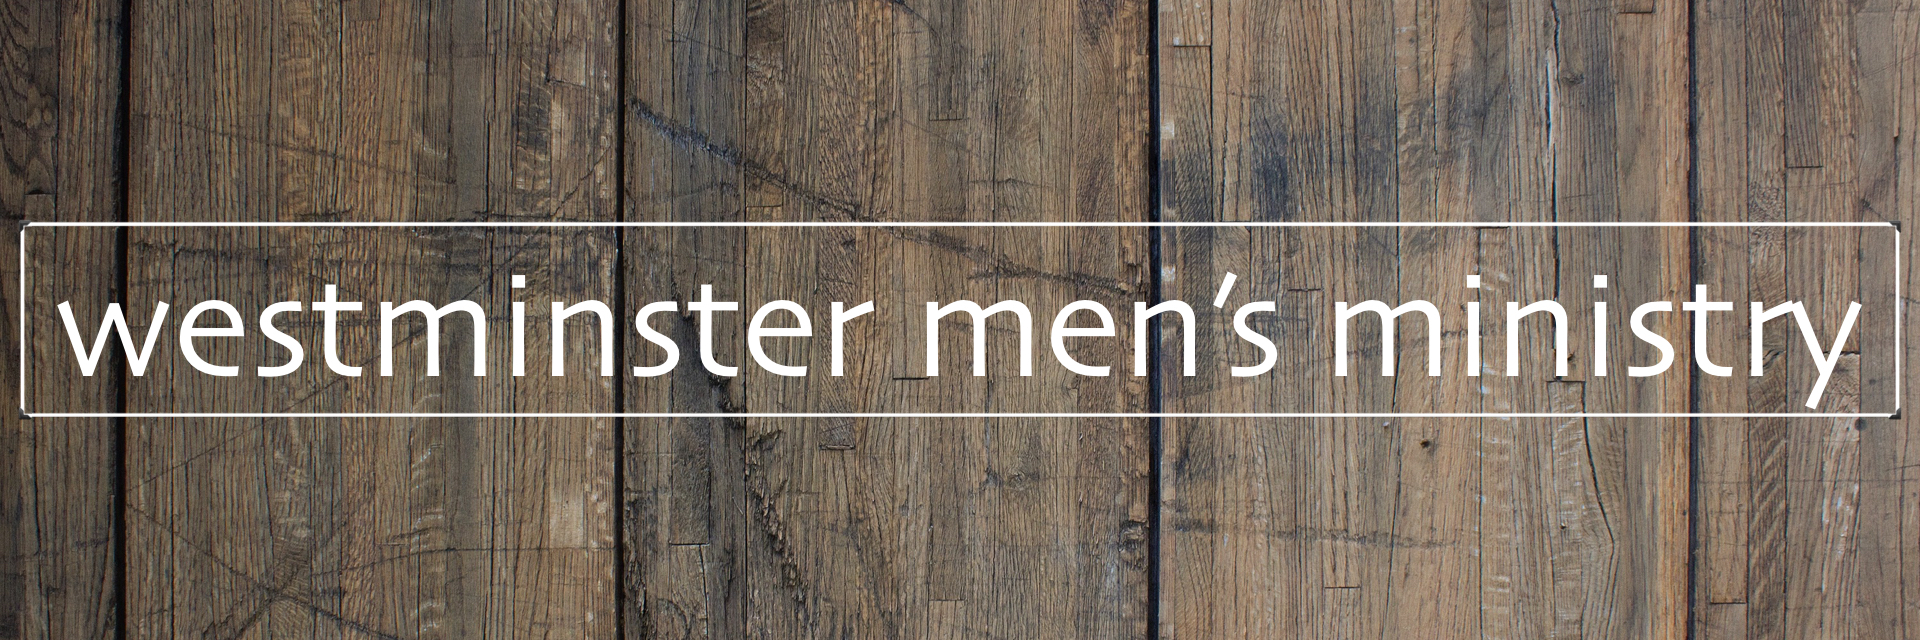 Wesminter Men's Ministry